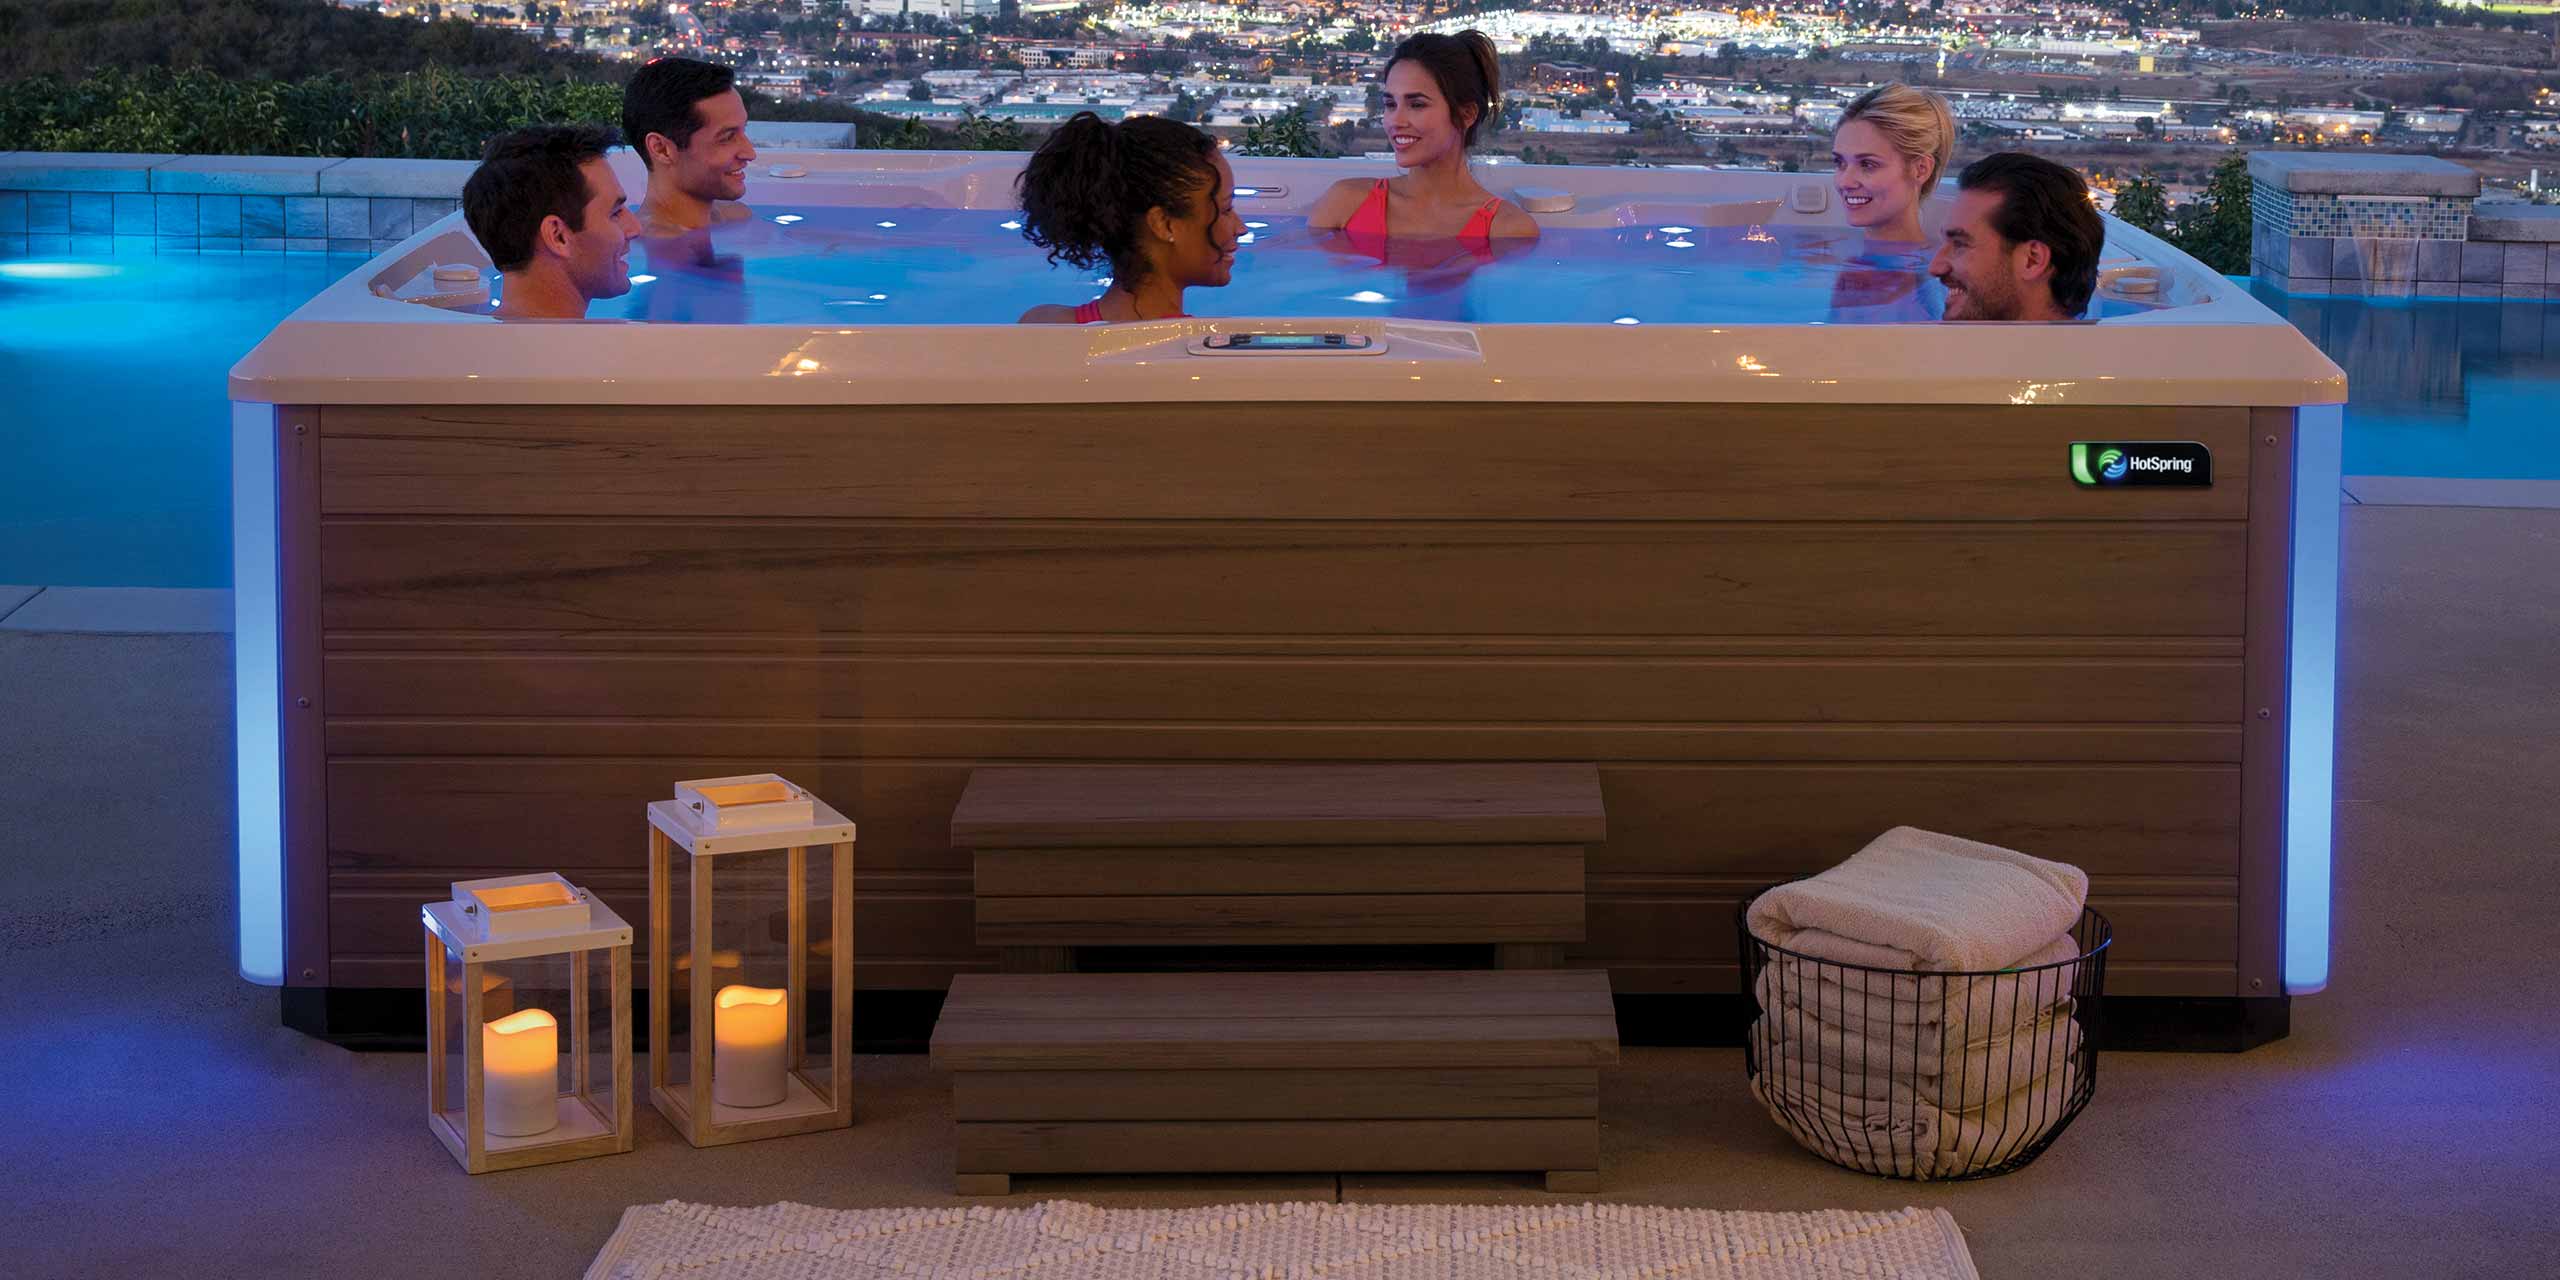 6 people enjoying hot tub at night